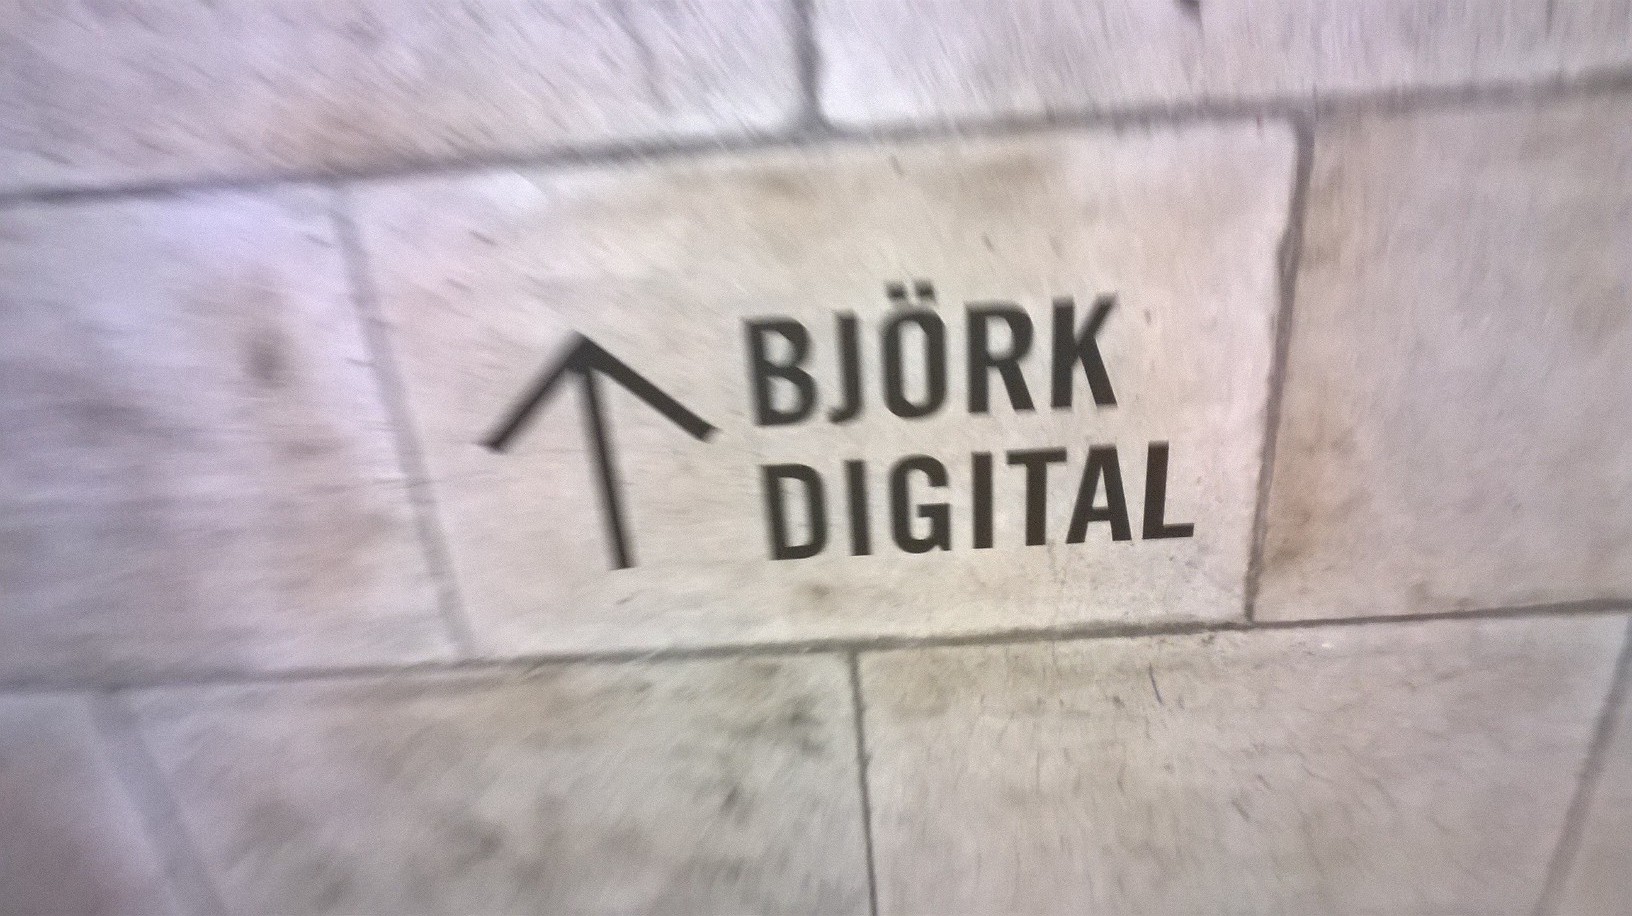 Bjork Digital